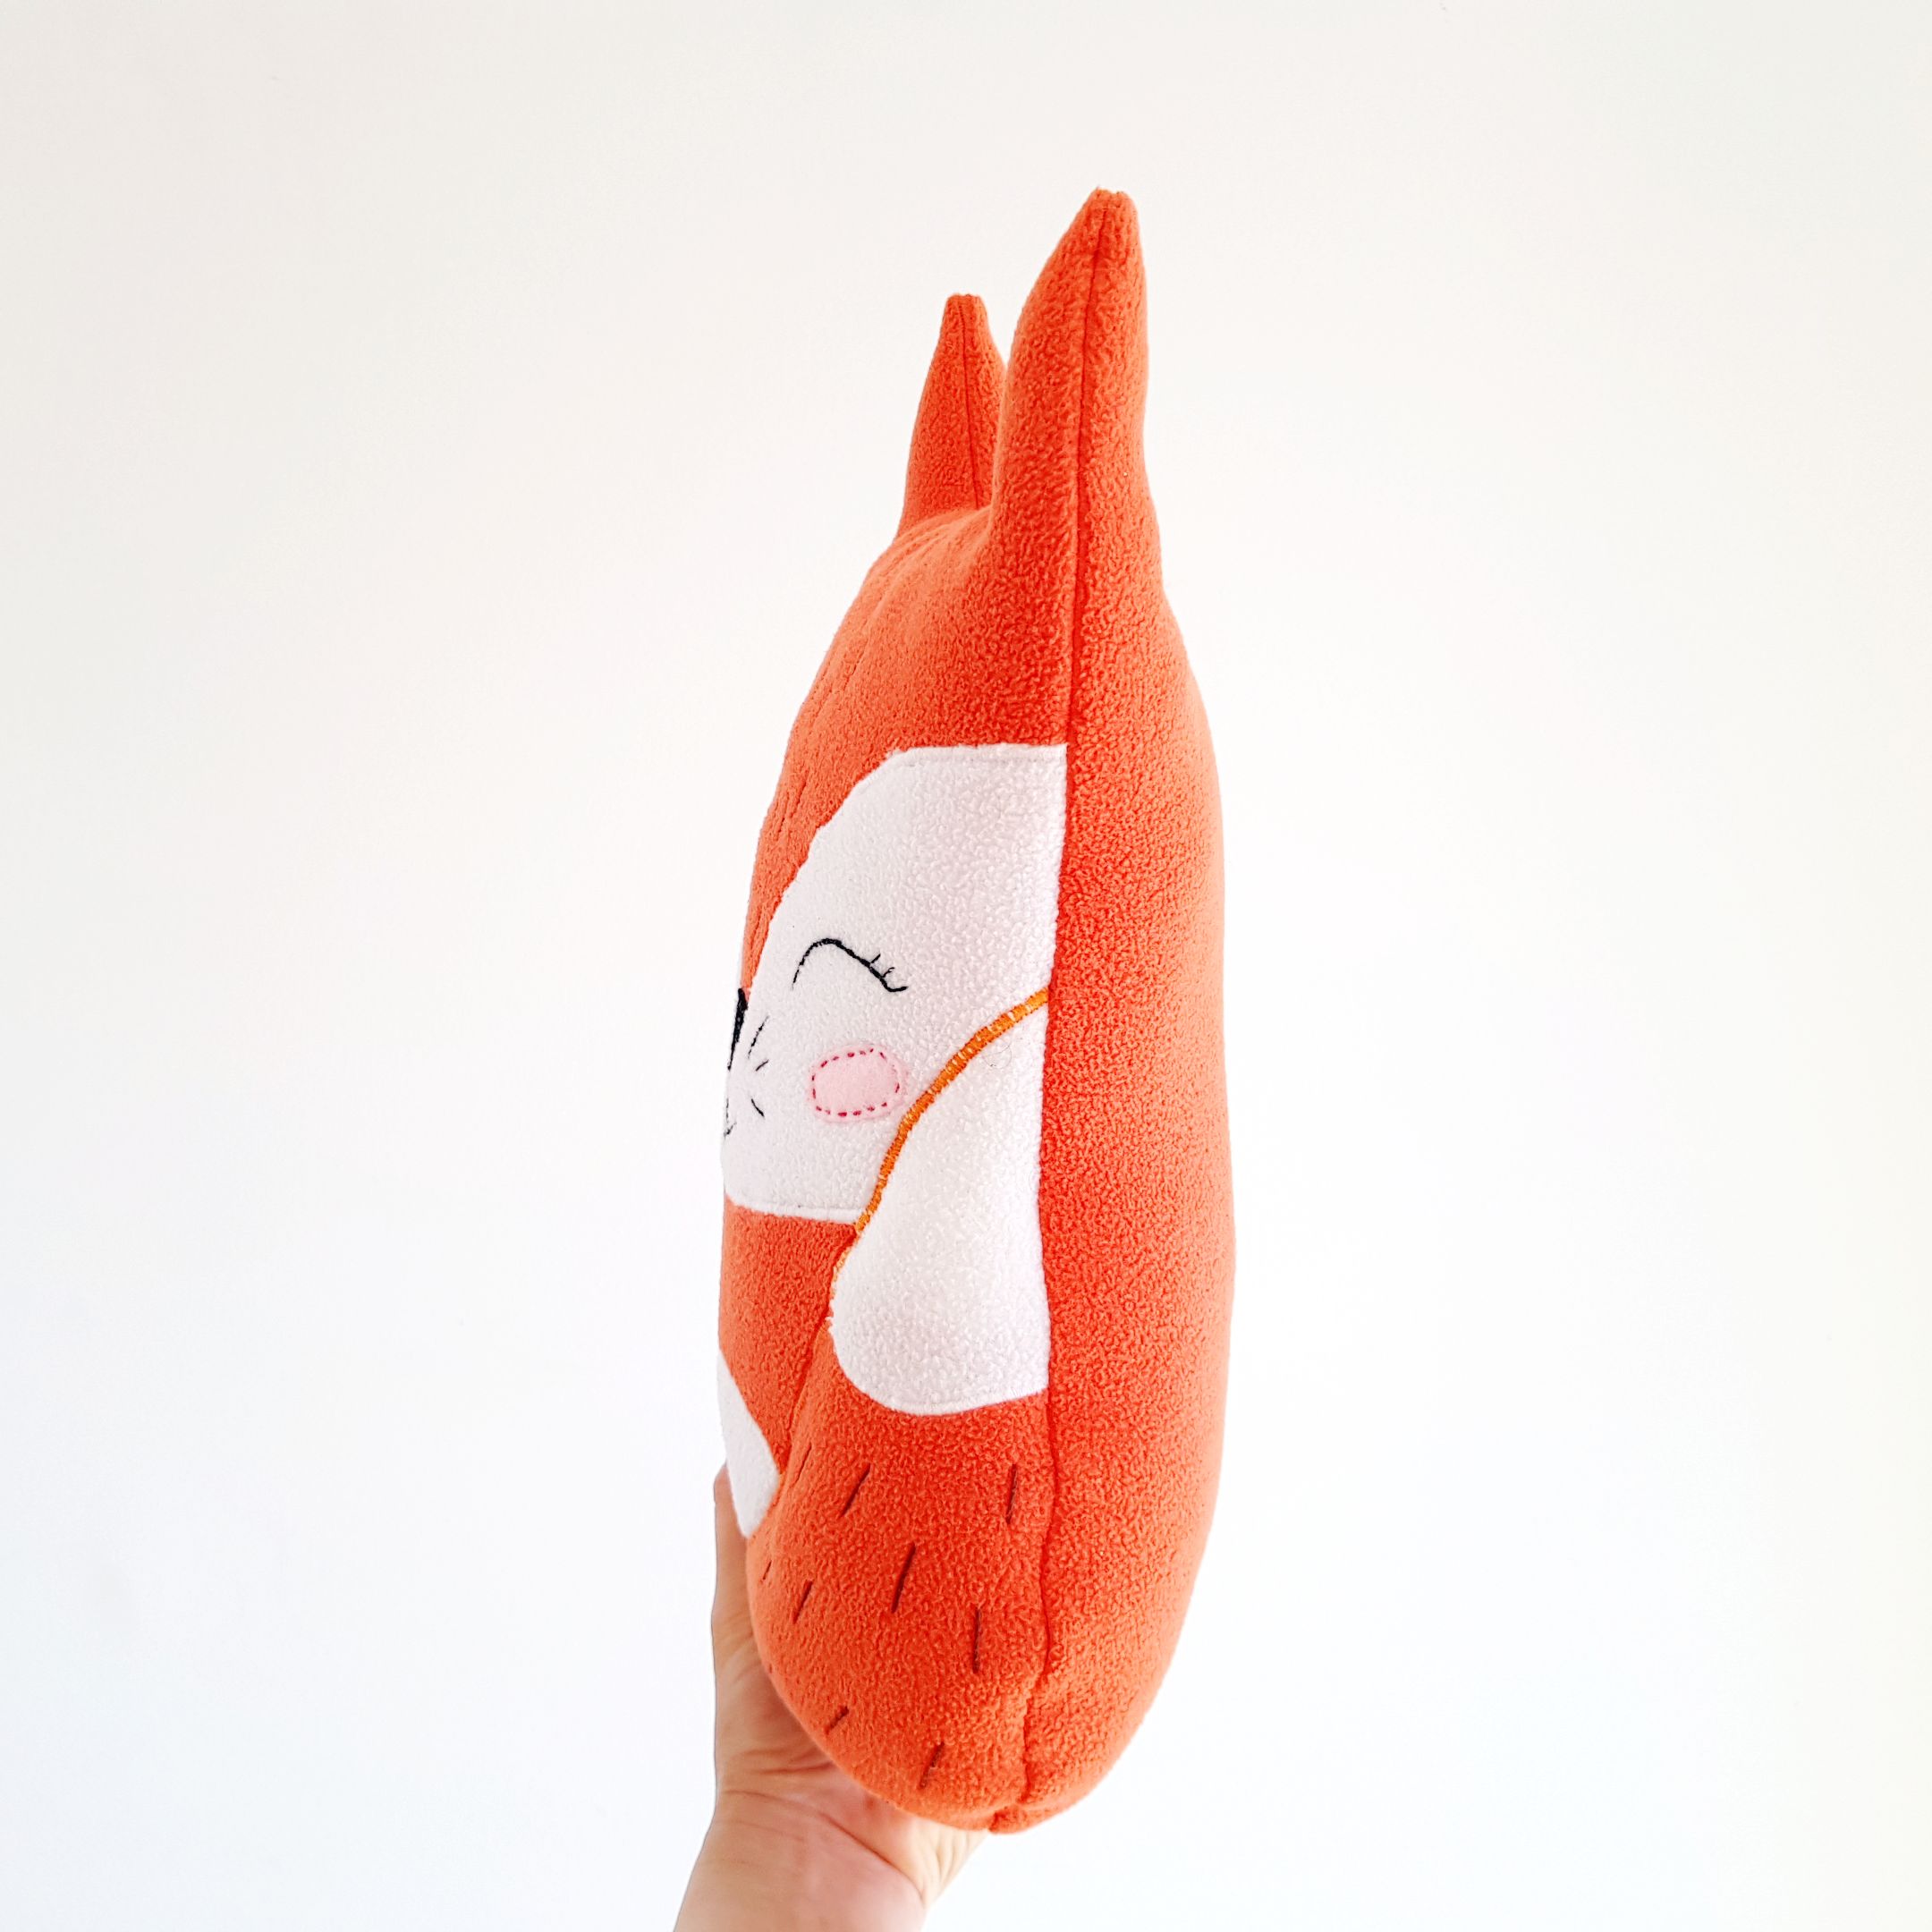 FOX PILLOW SEWING PATTERN, cute stuffed animal toy